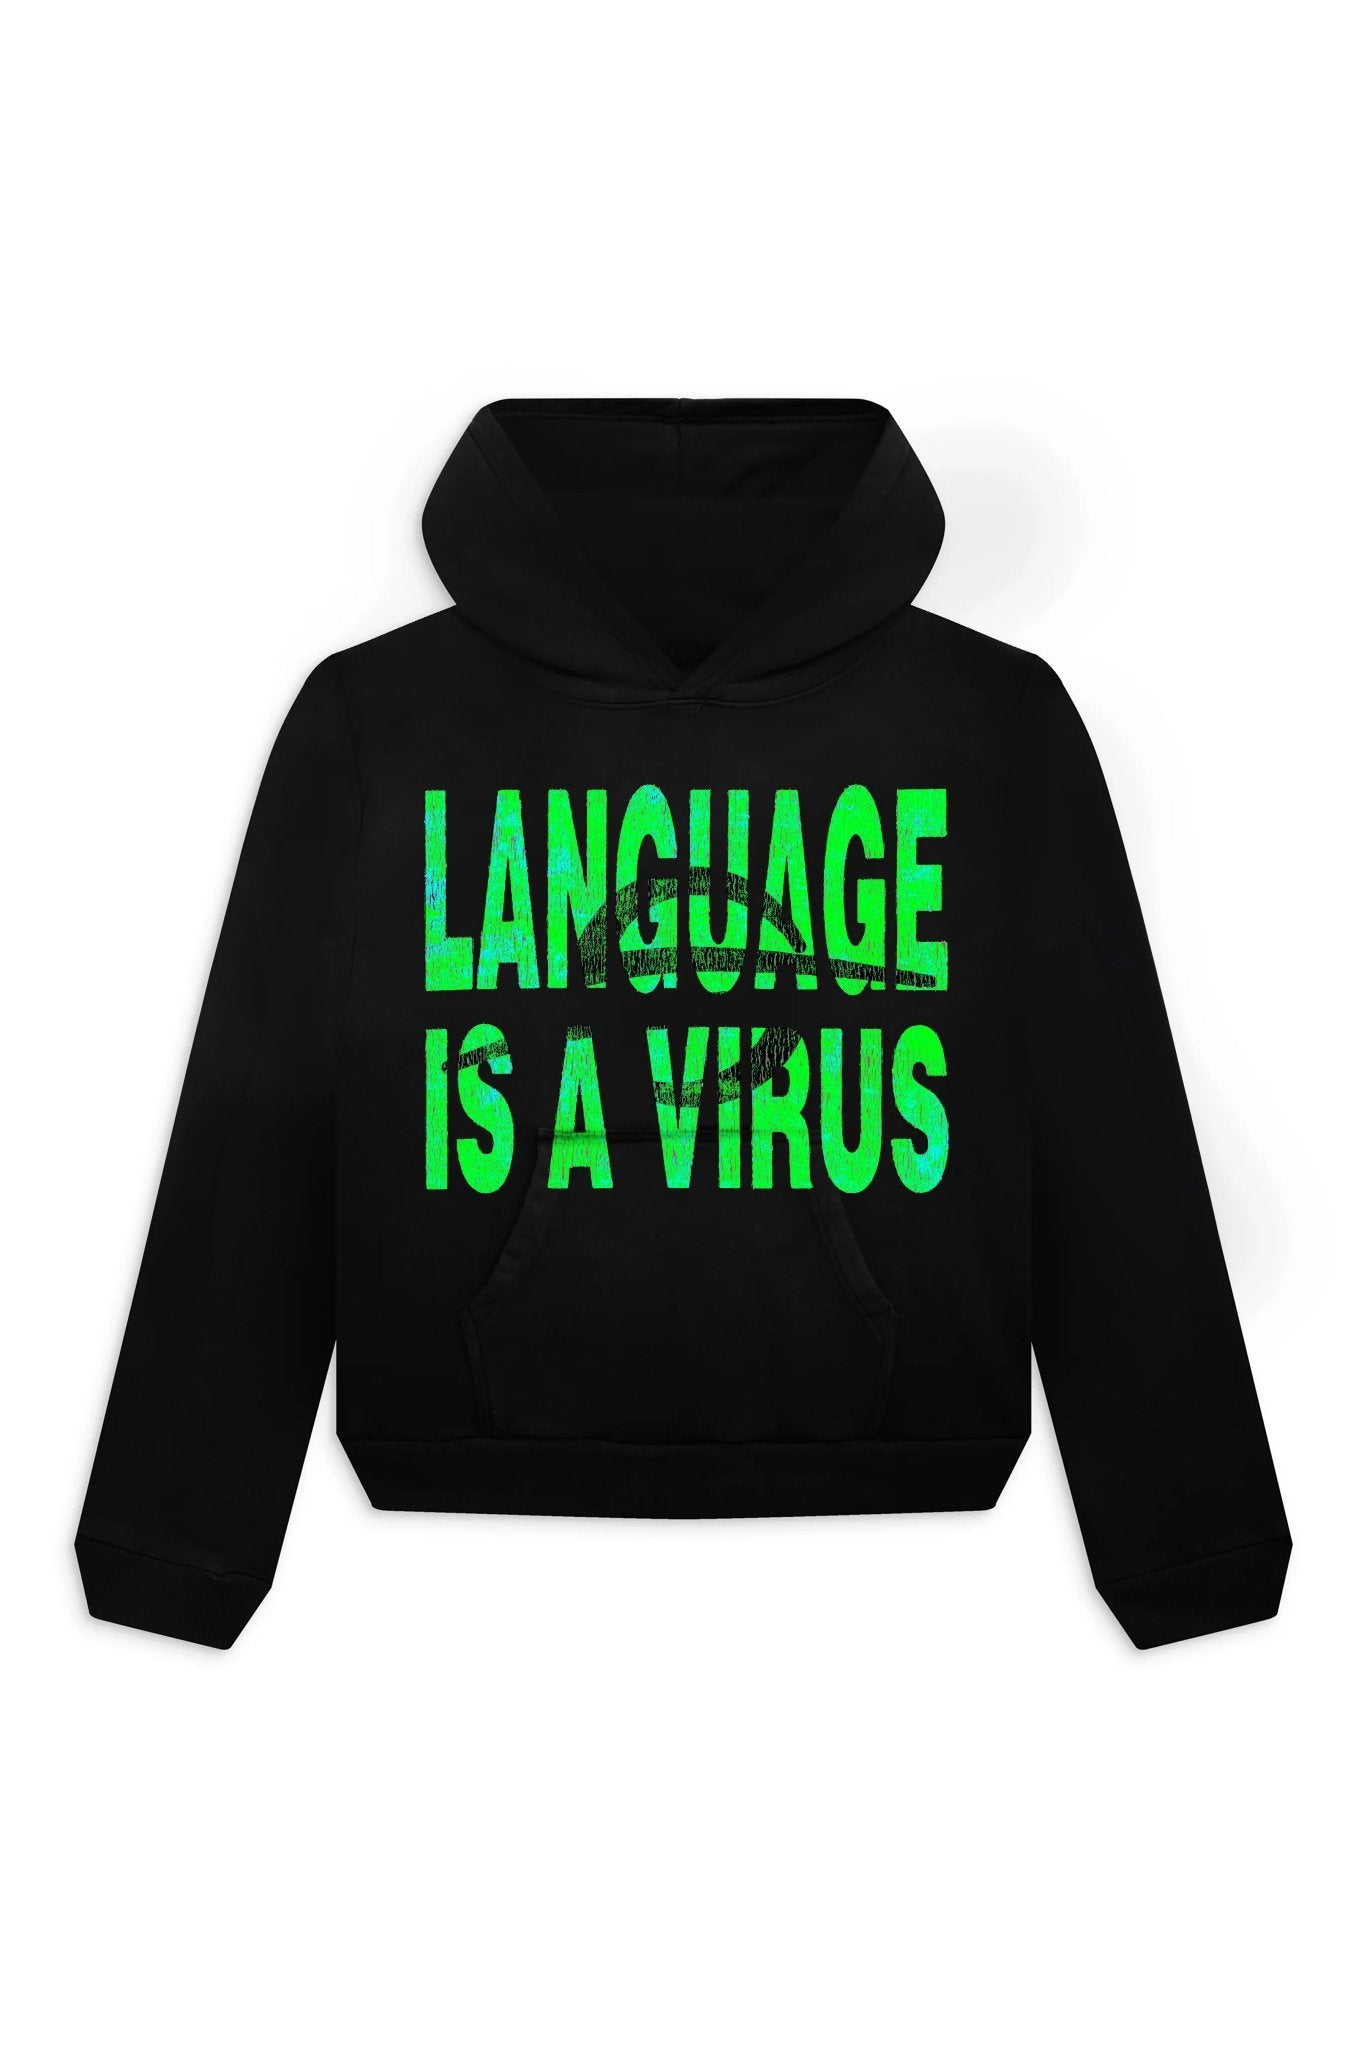 LANGUAGE IS A VIRUS - SAMEHELLNEWCIRCLE